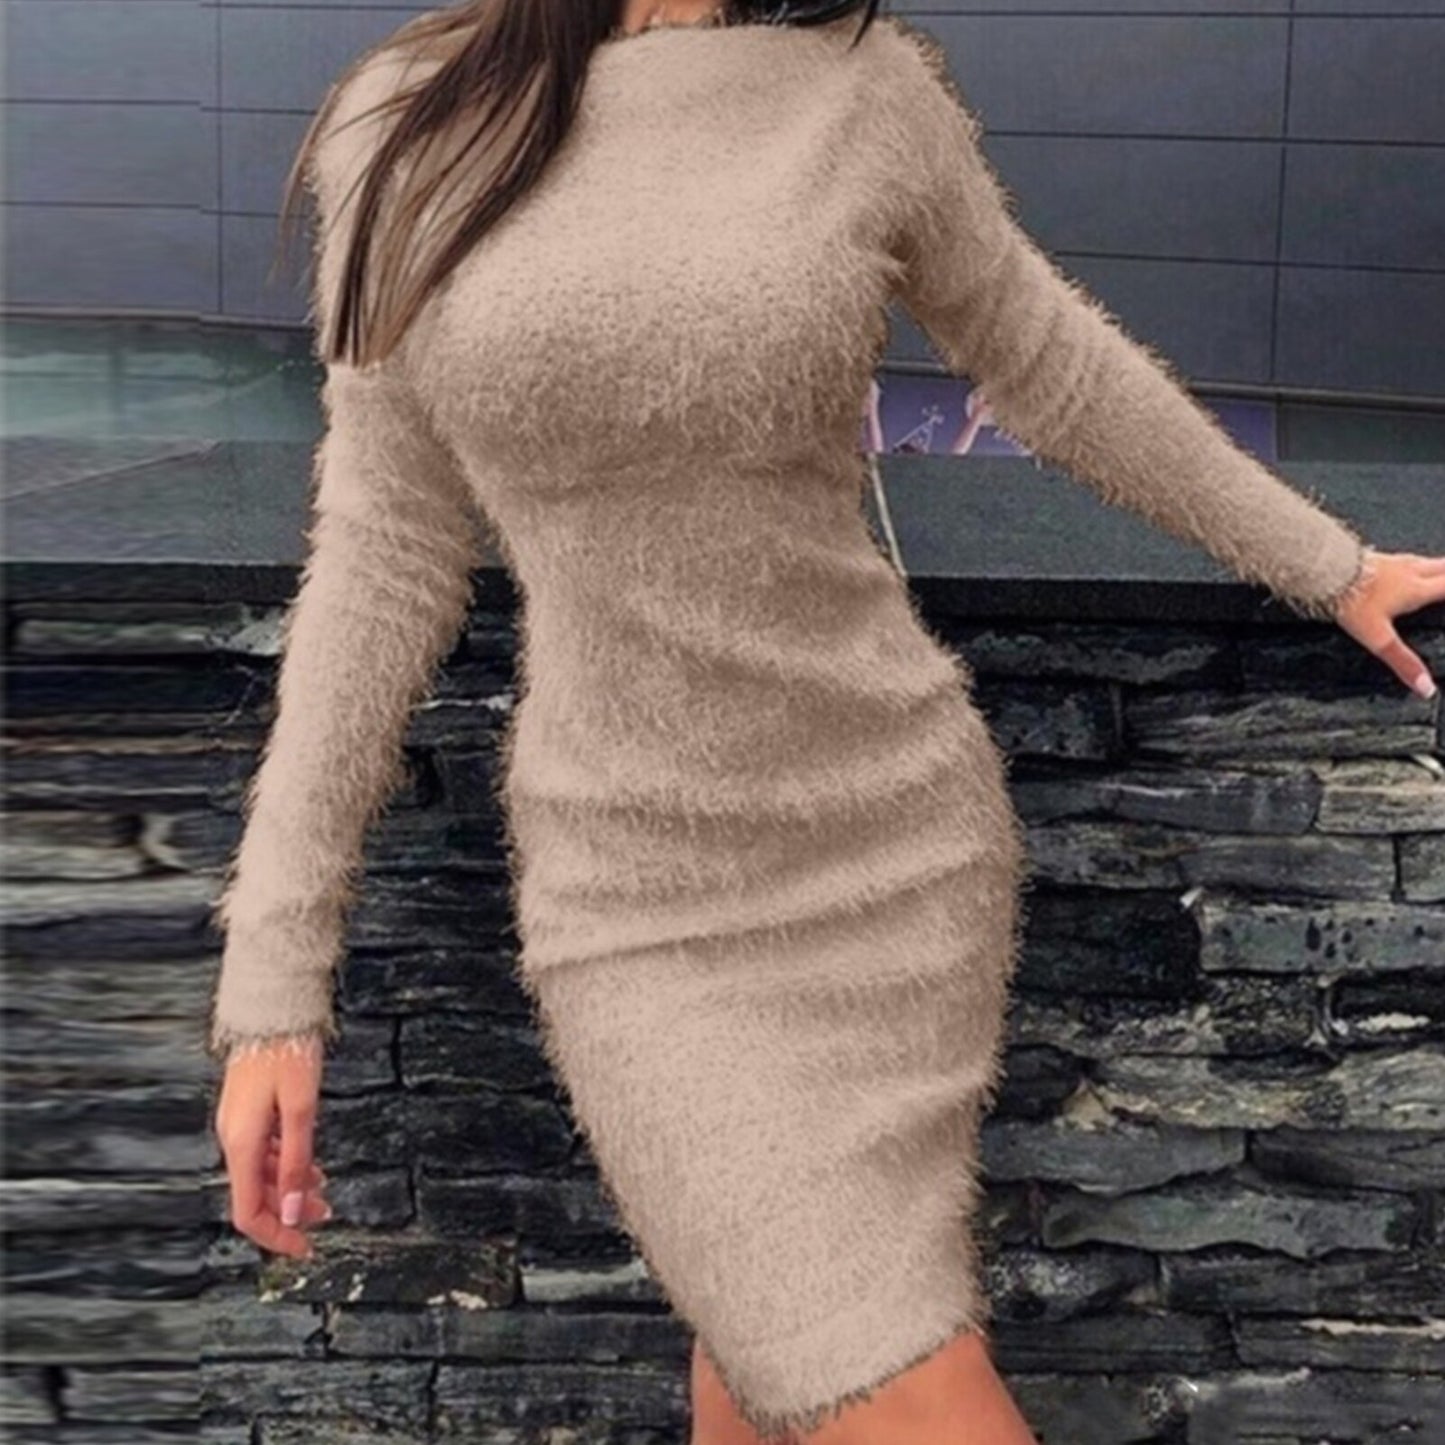 Hot Plus Size Women Dress Autumn Winter Solid Color Long Sleeve Sweater Fluffy Kee-length Bodycon Dress платье